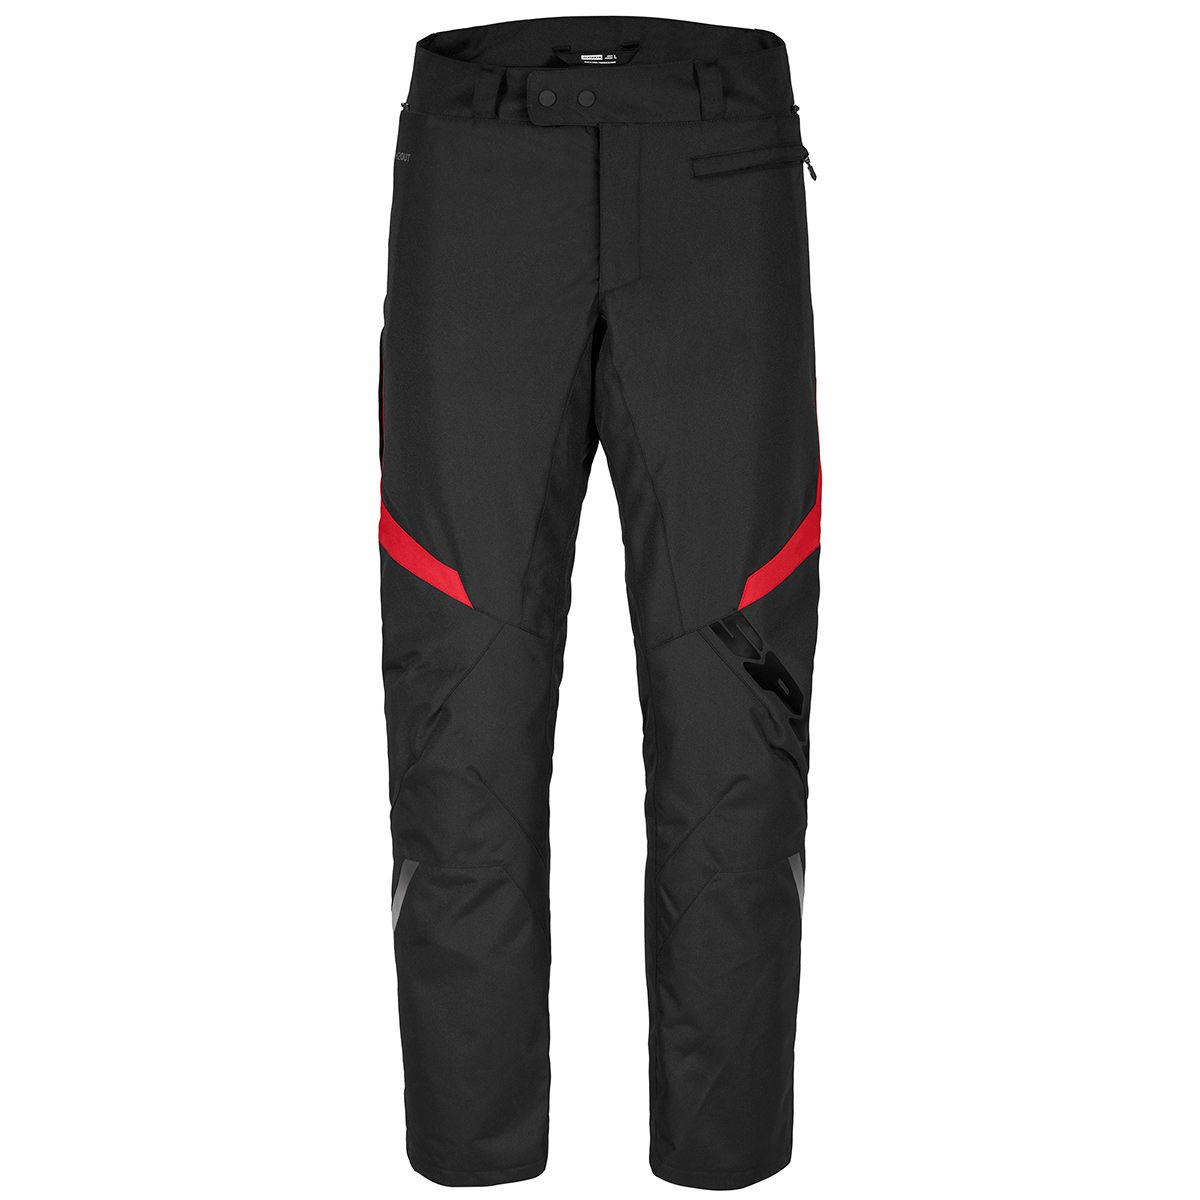 Image of Spidi Sportmaster Pants Black Red Size M EN